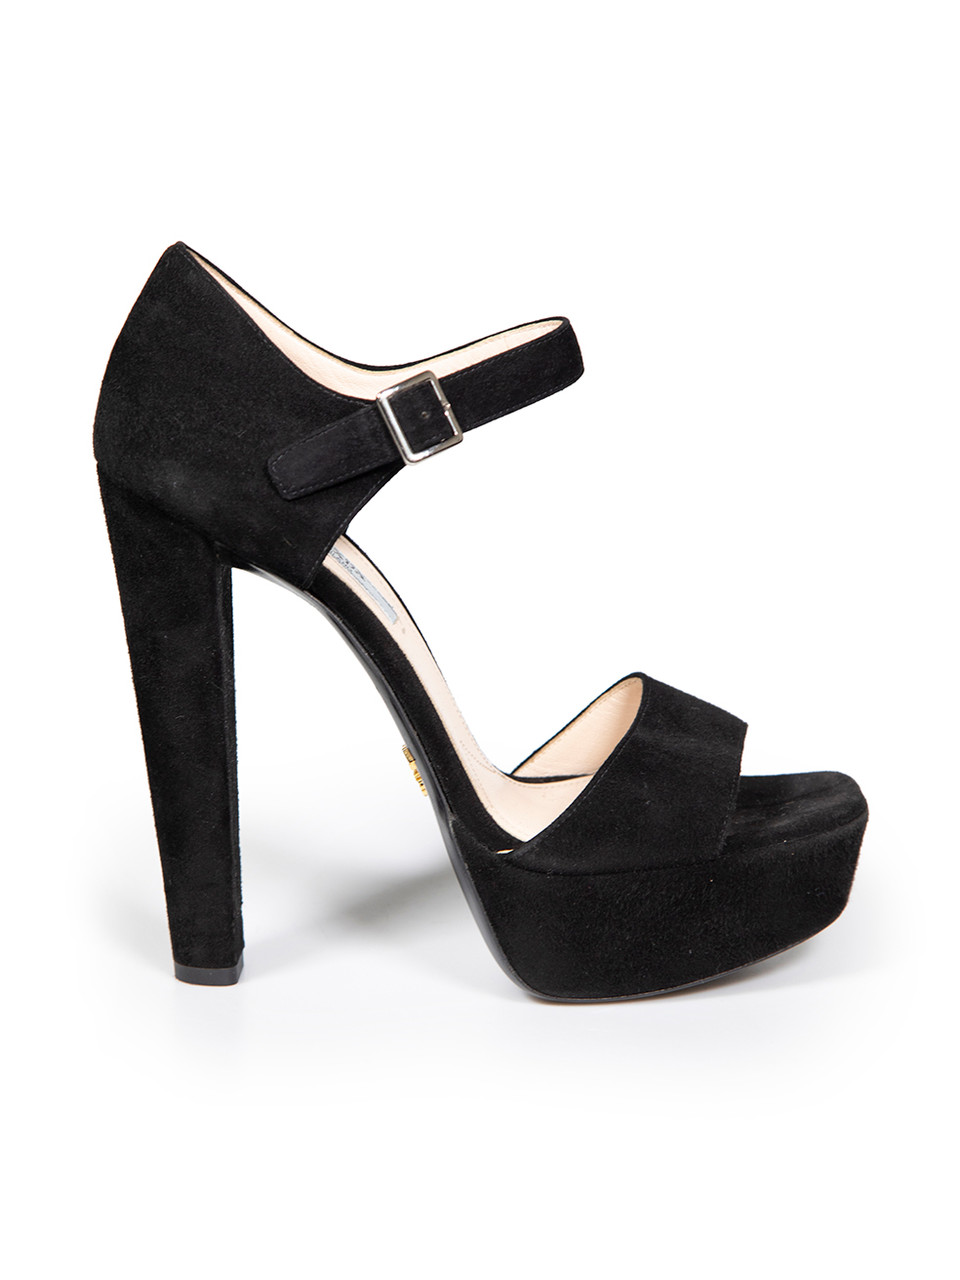 Prada Black Suede Open Toe Platform Sandals